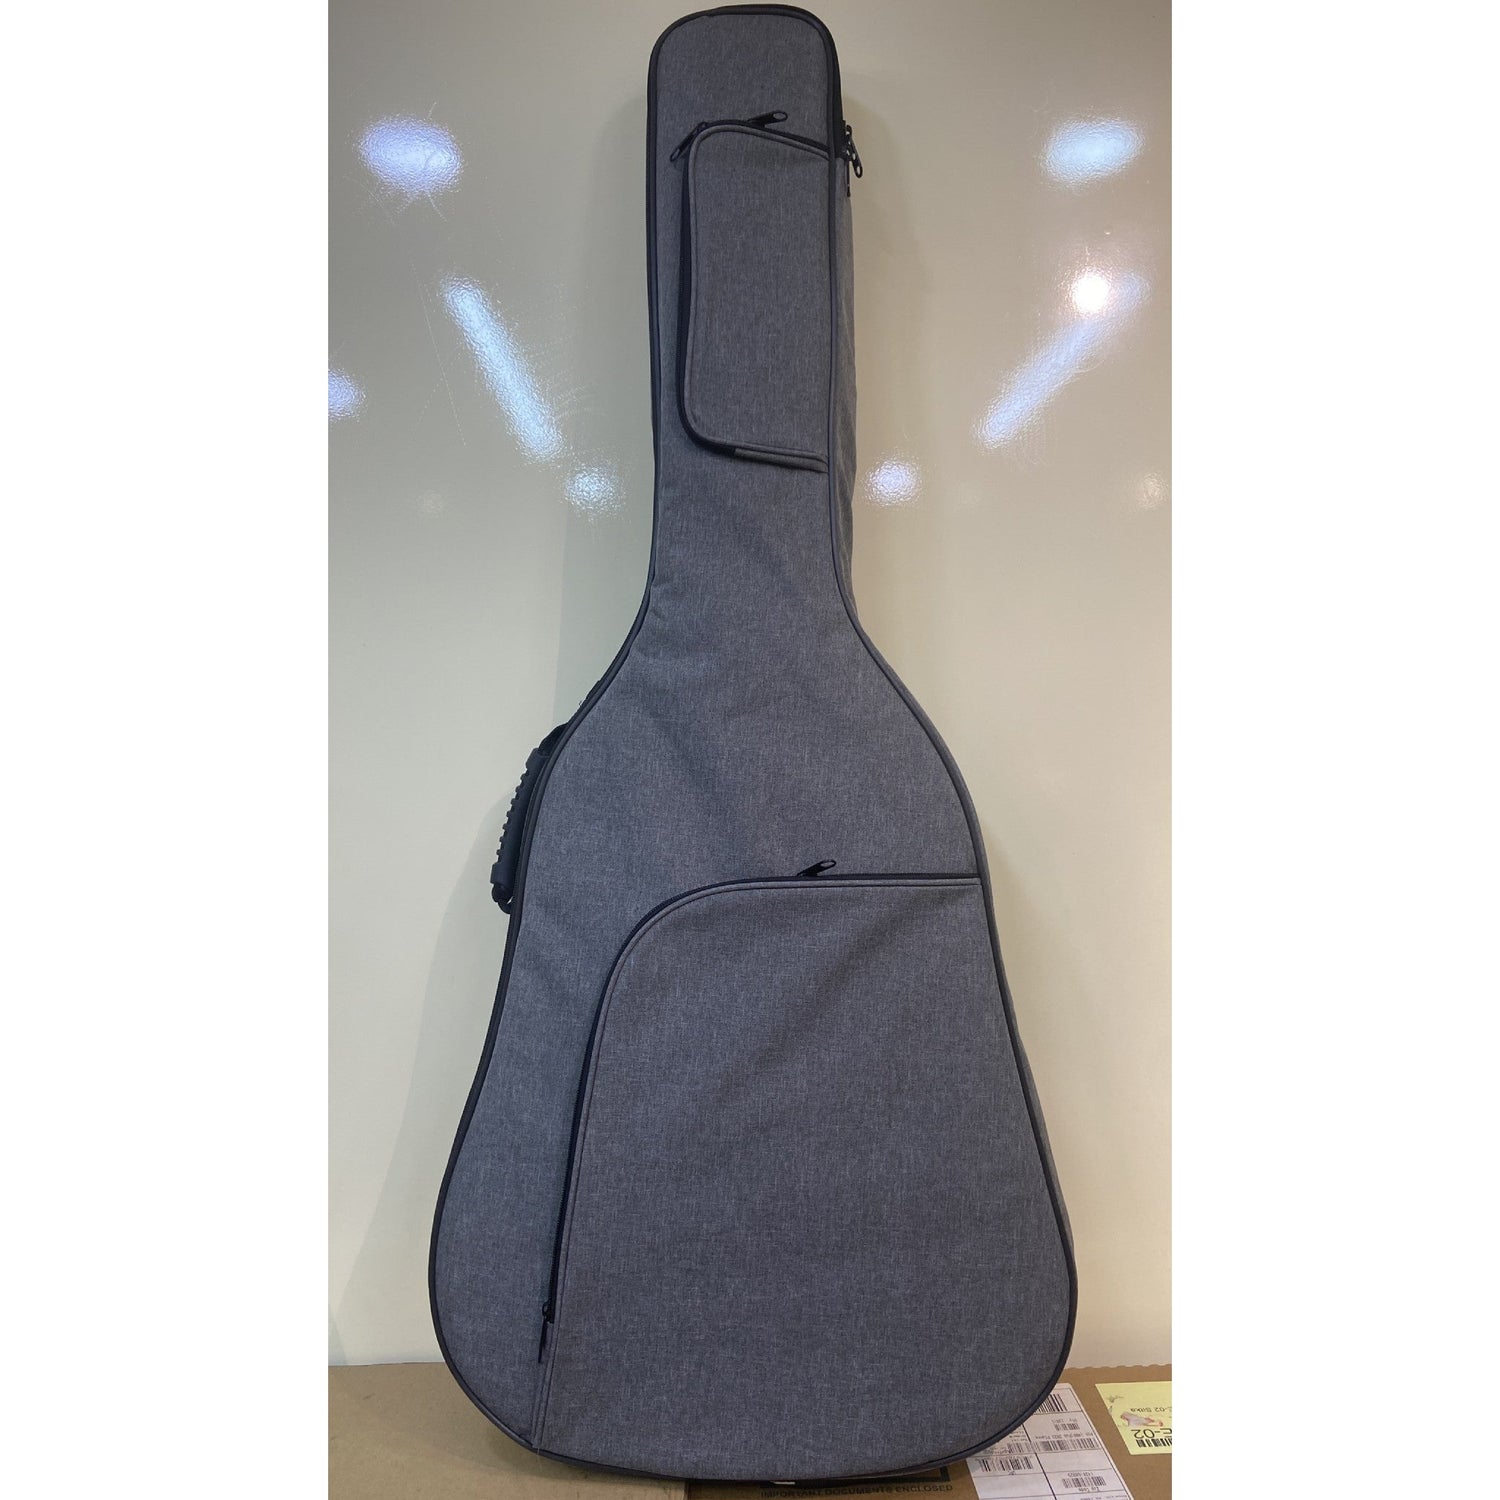 Bao Đàn Guitar